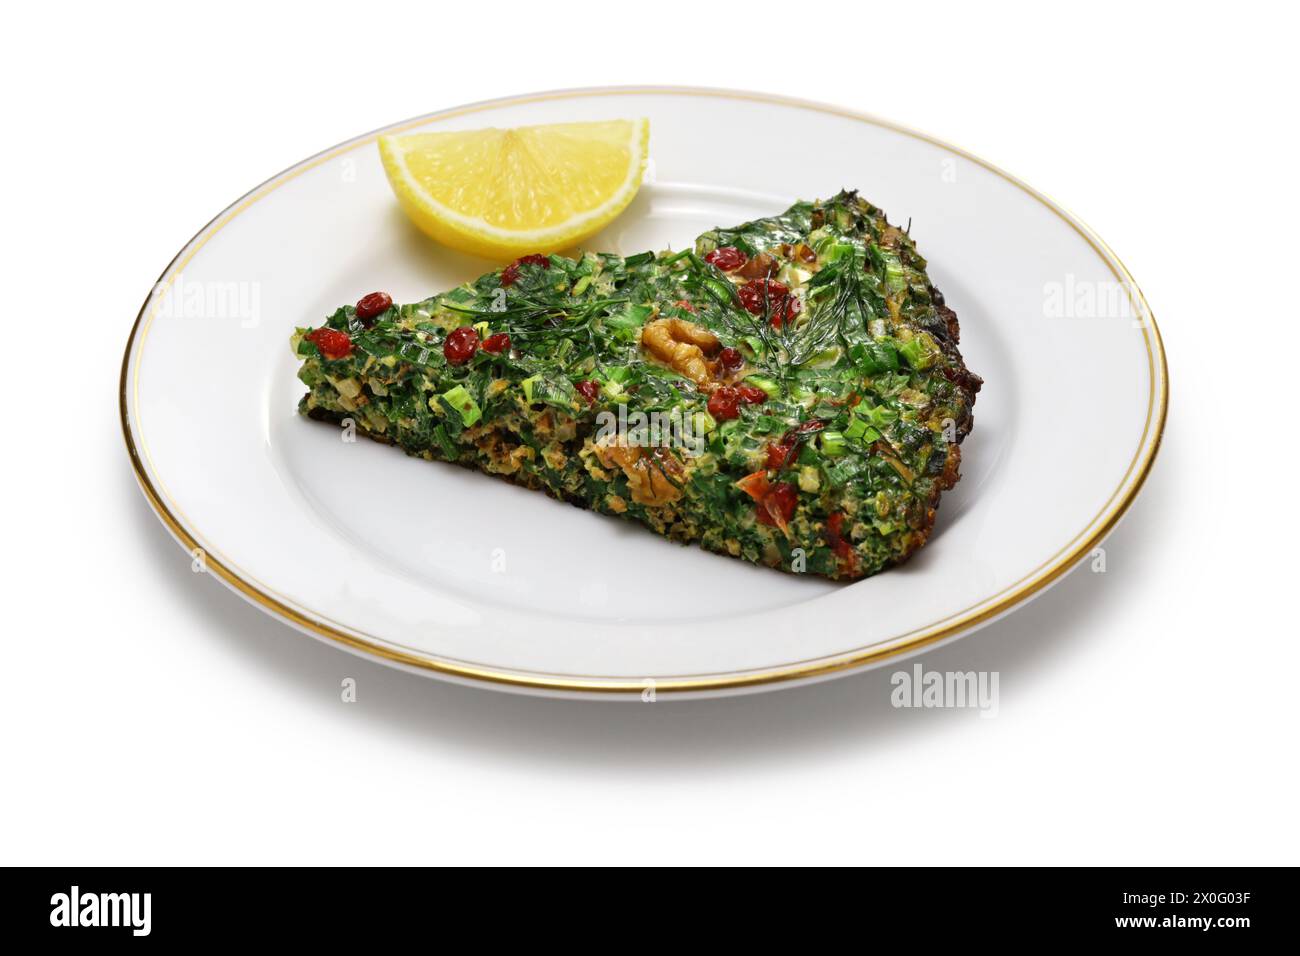 Kuku sabzi (herb frittata), vegetarian Iranian food Stock Photo